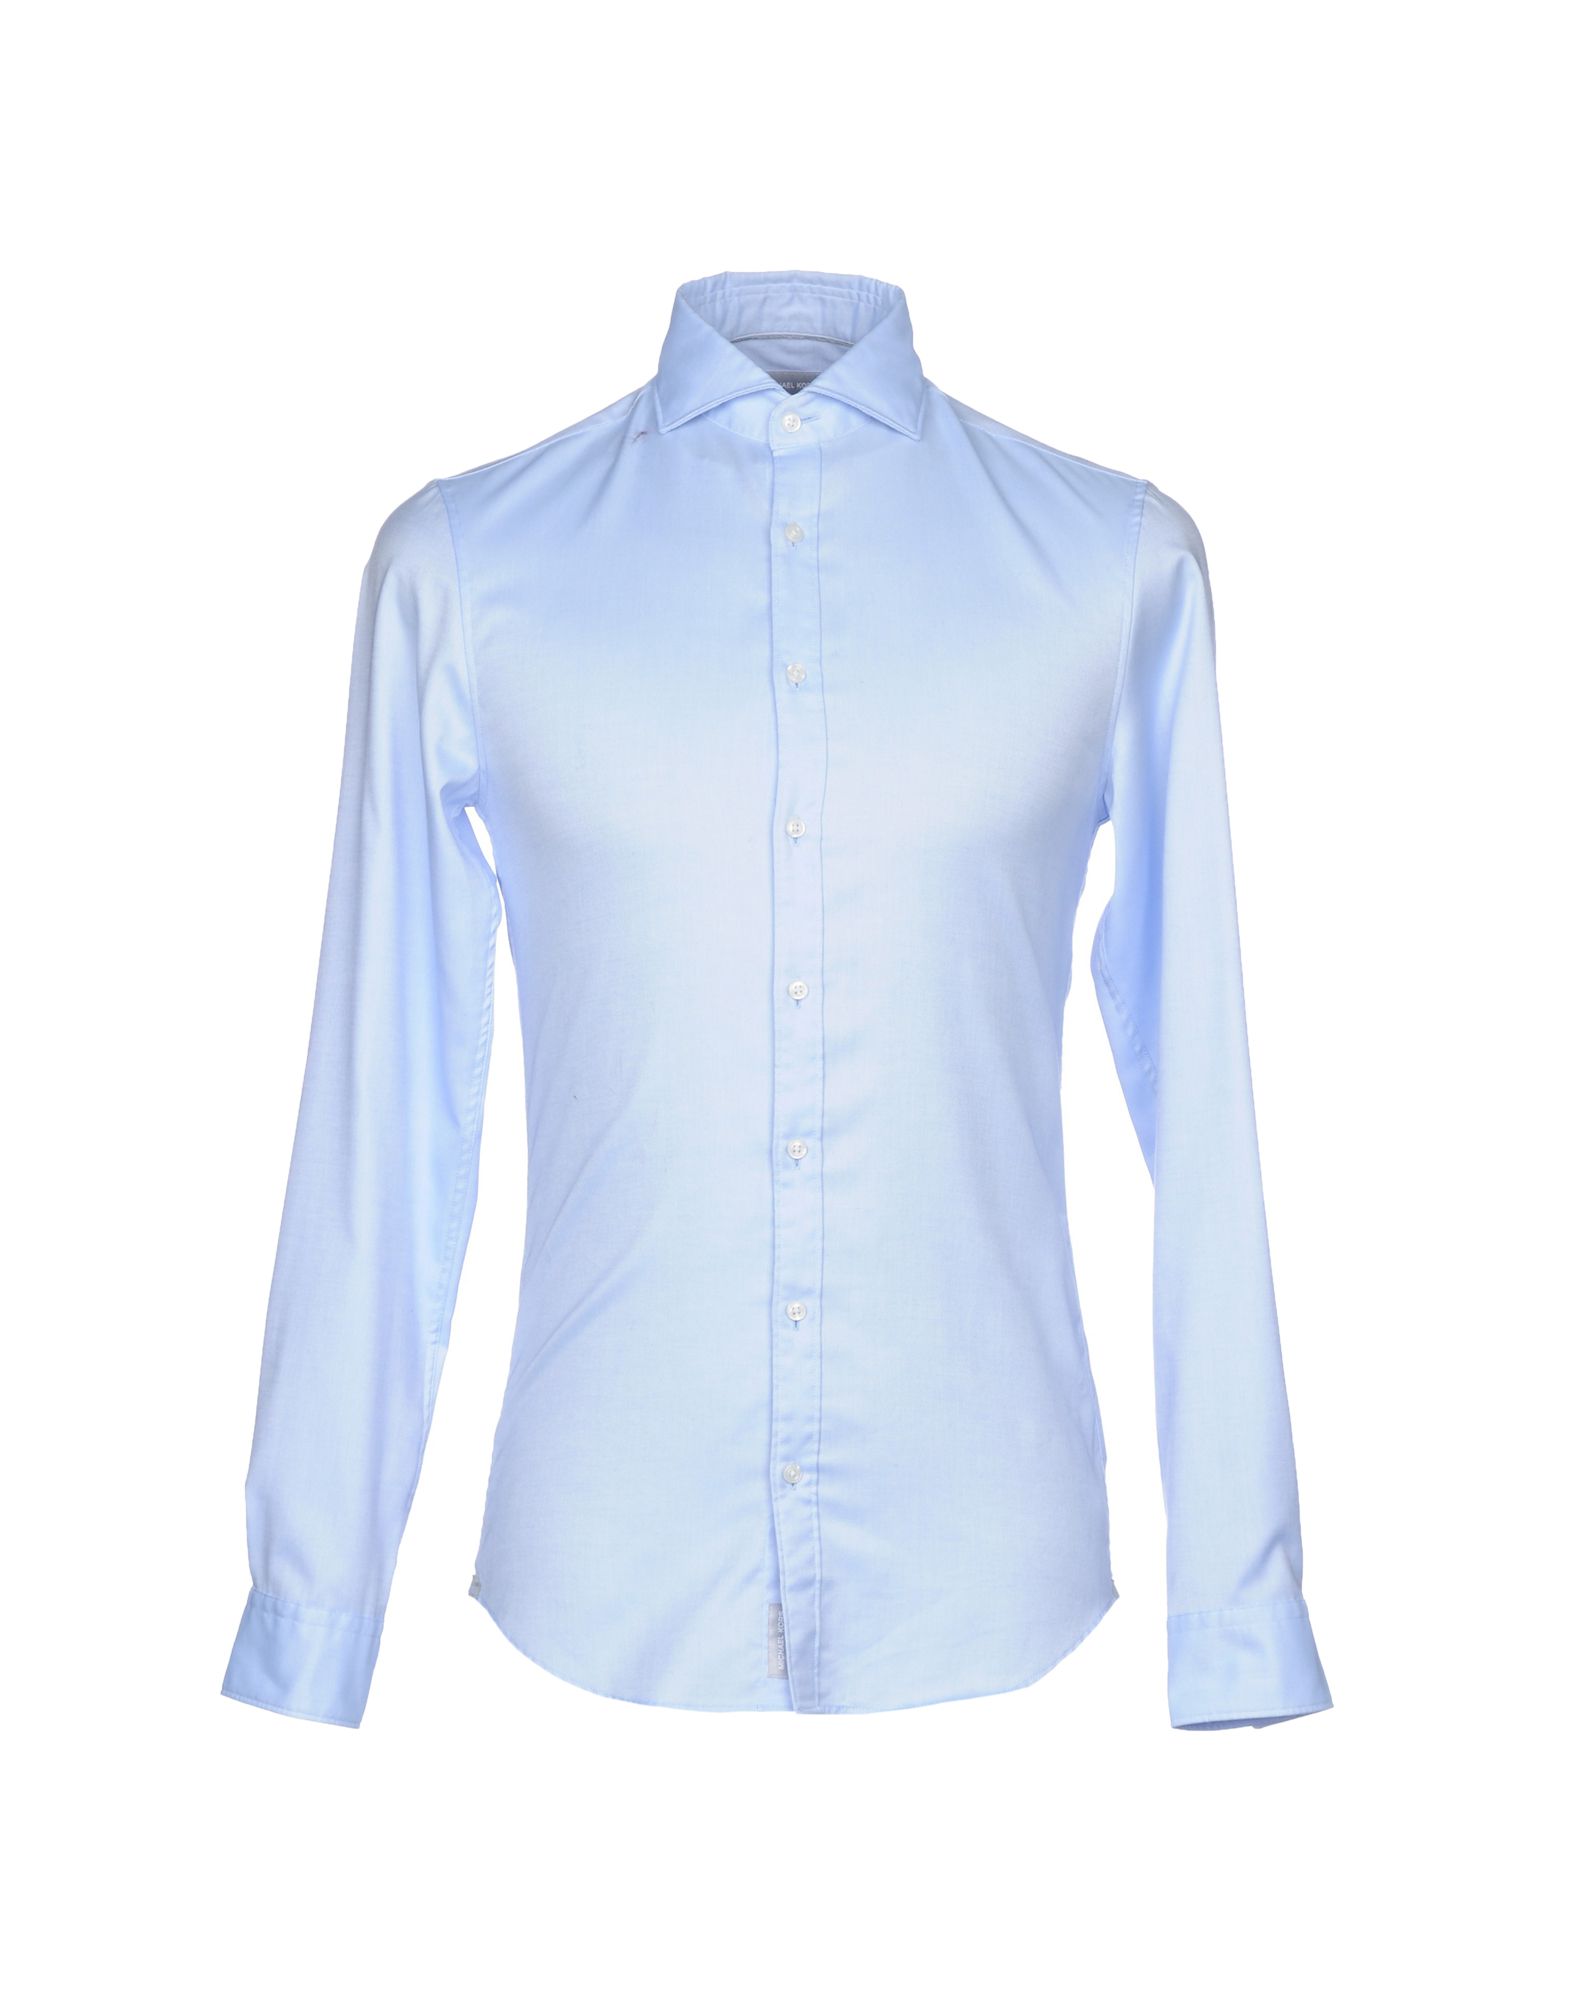 MICHAEL KORS Solid color shirt,38759299DT 2